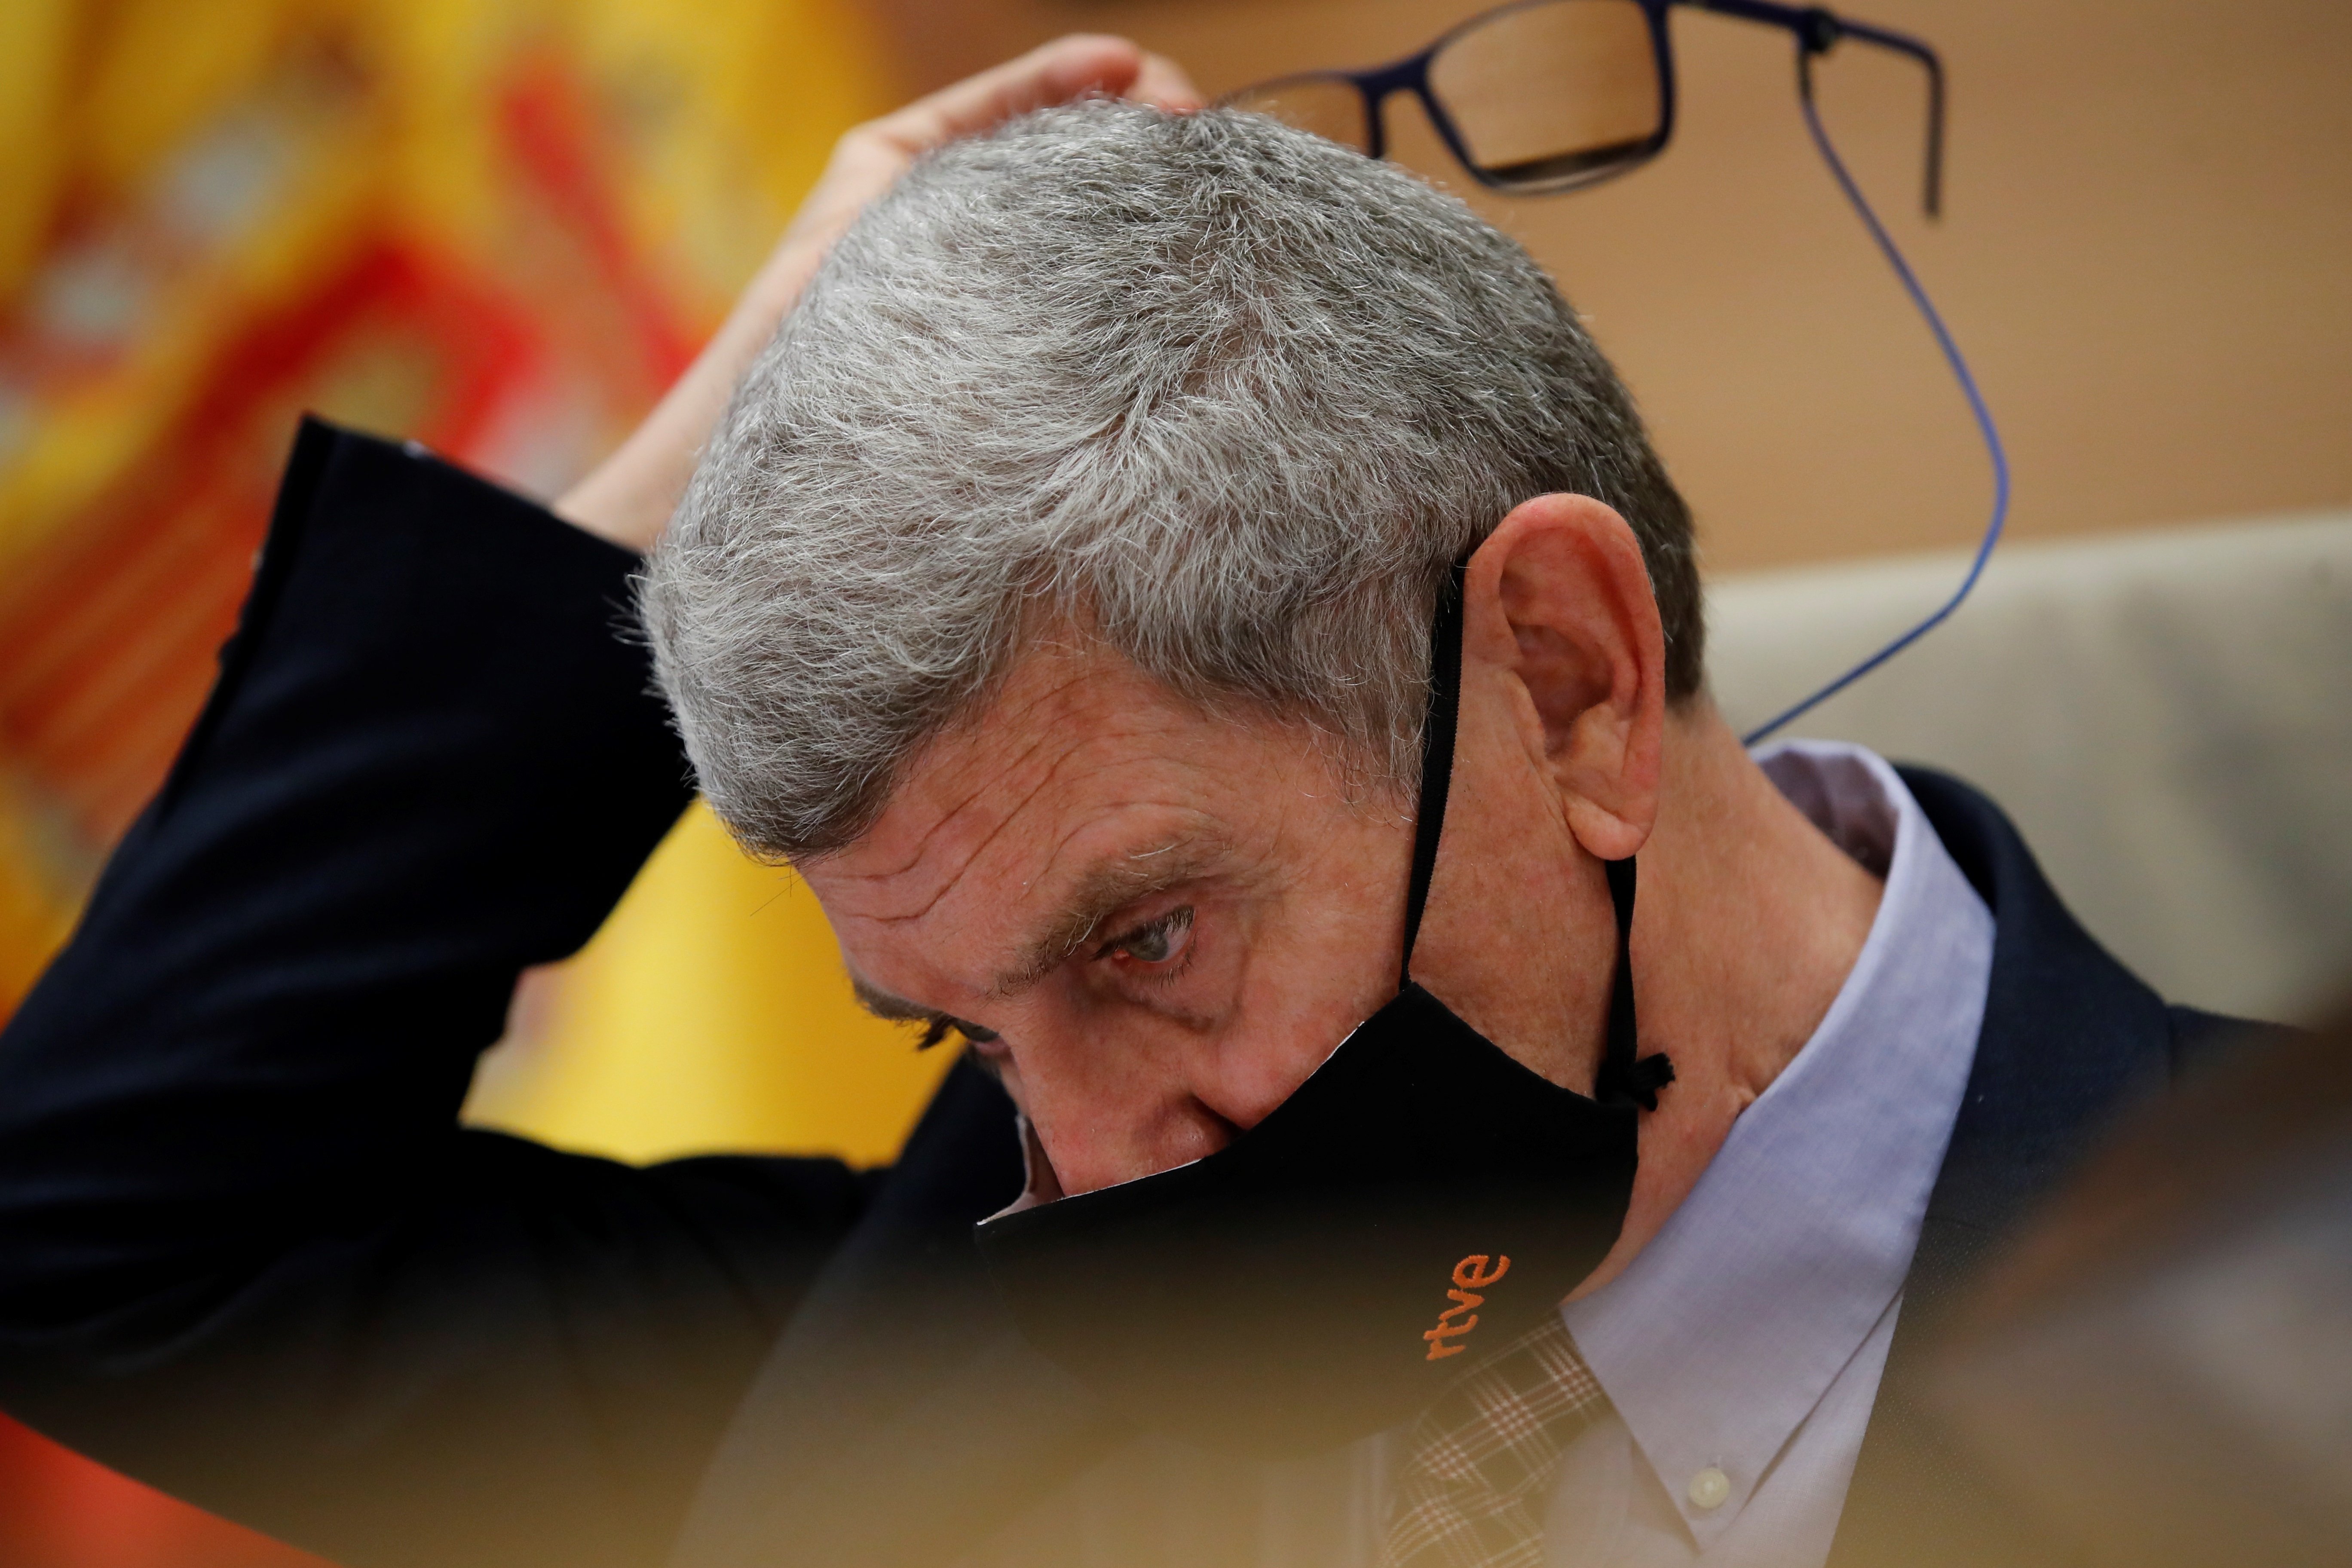 El programa en el punt de mira del nou president de TVE: "no vale la pena"